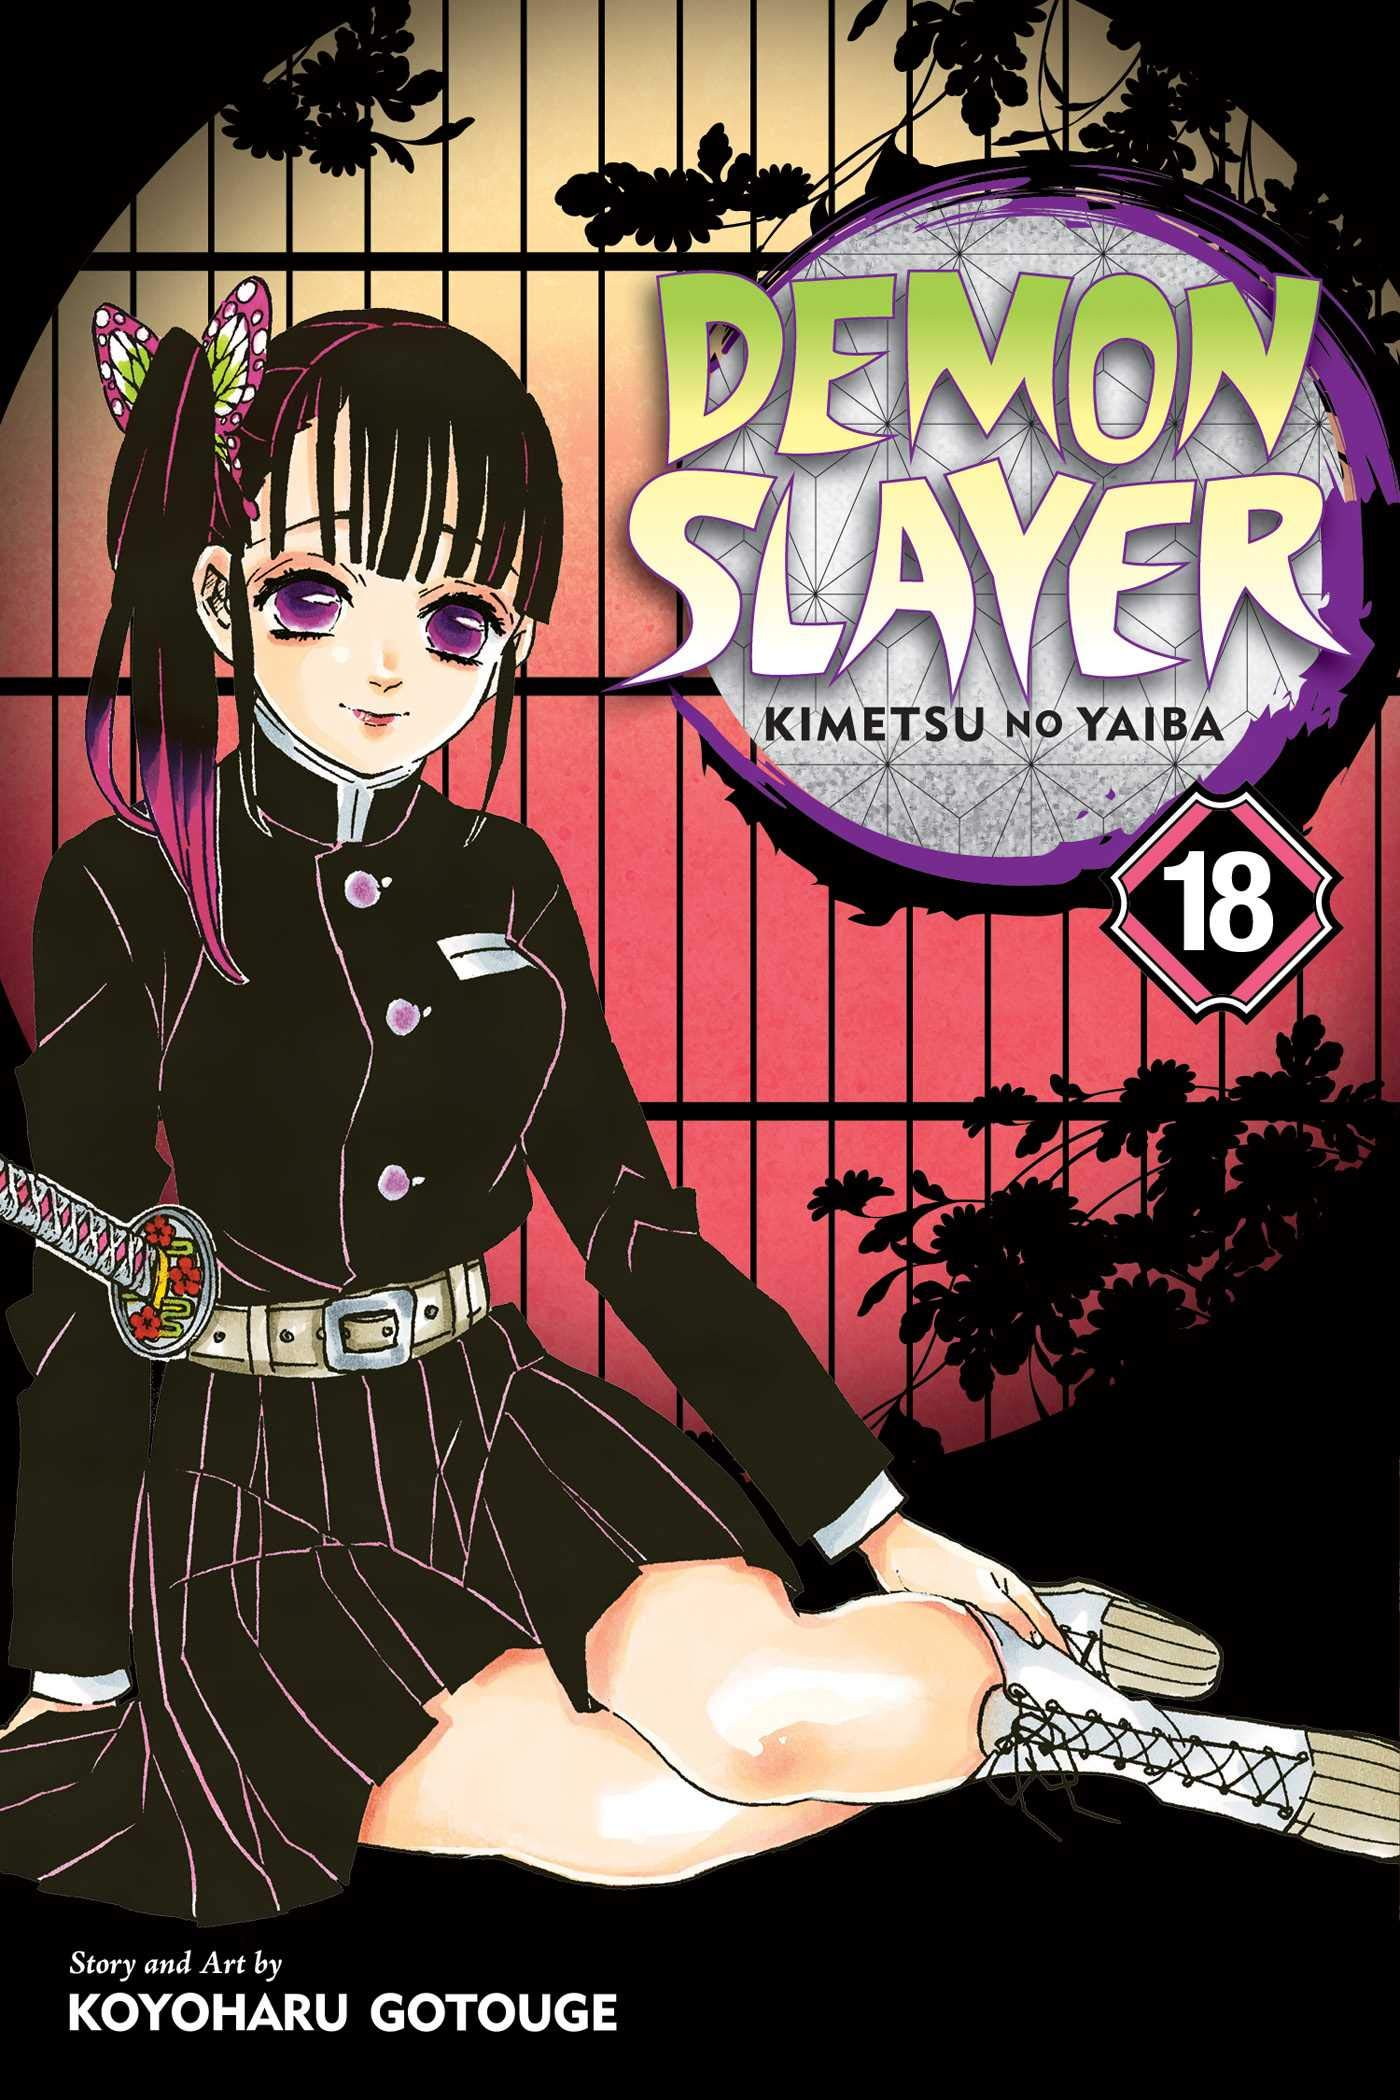 Demon Slayer, Kimetsu No Yaiba Mangá Volume 3 Ao 10 - kit em